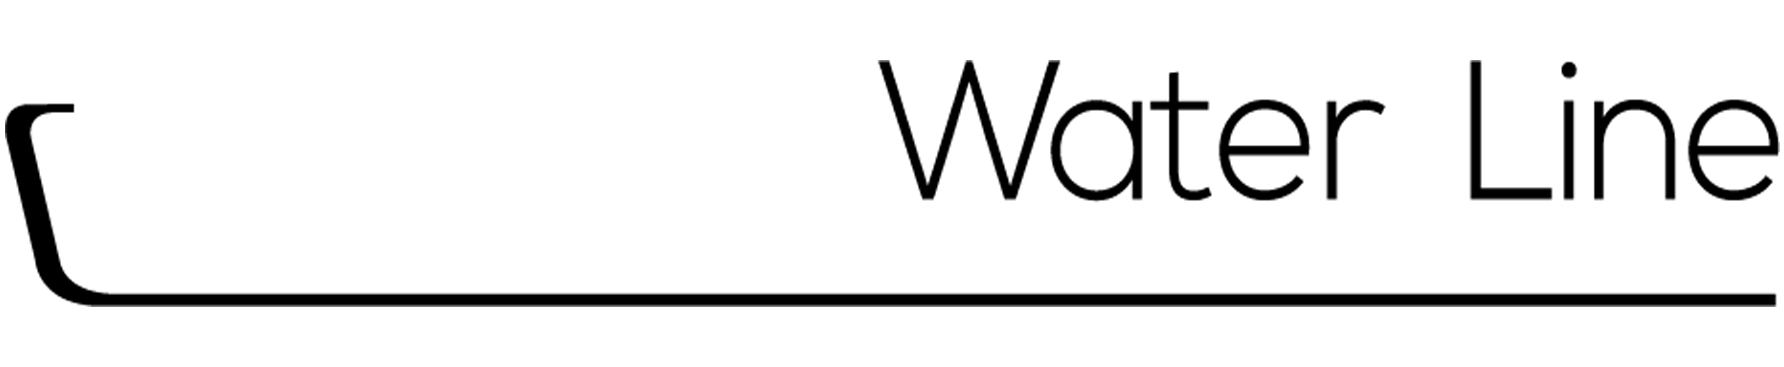 Logotipo do Dosatron WaterLine